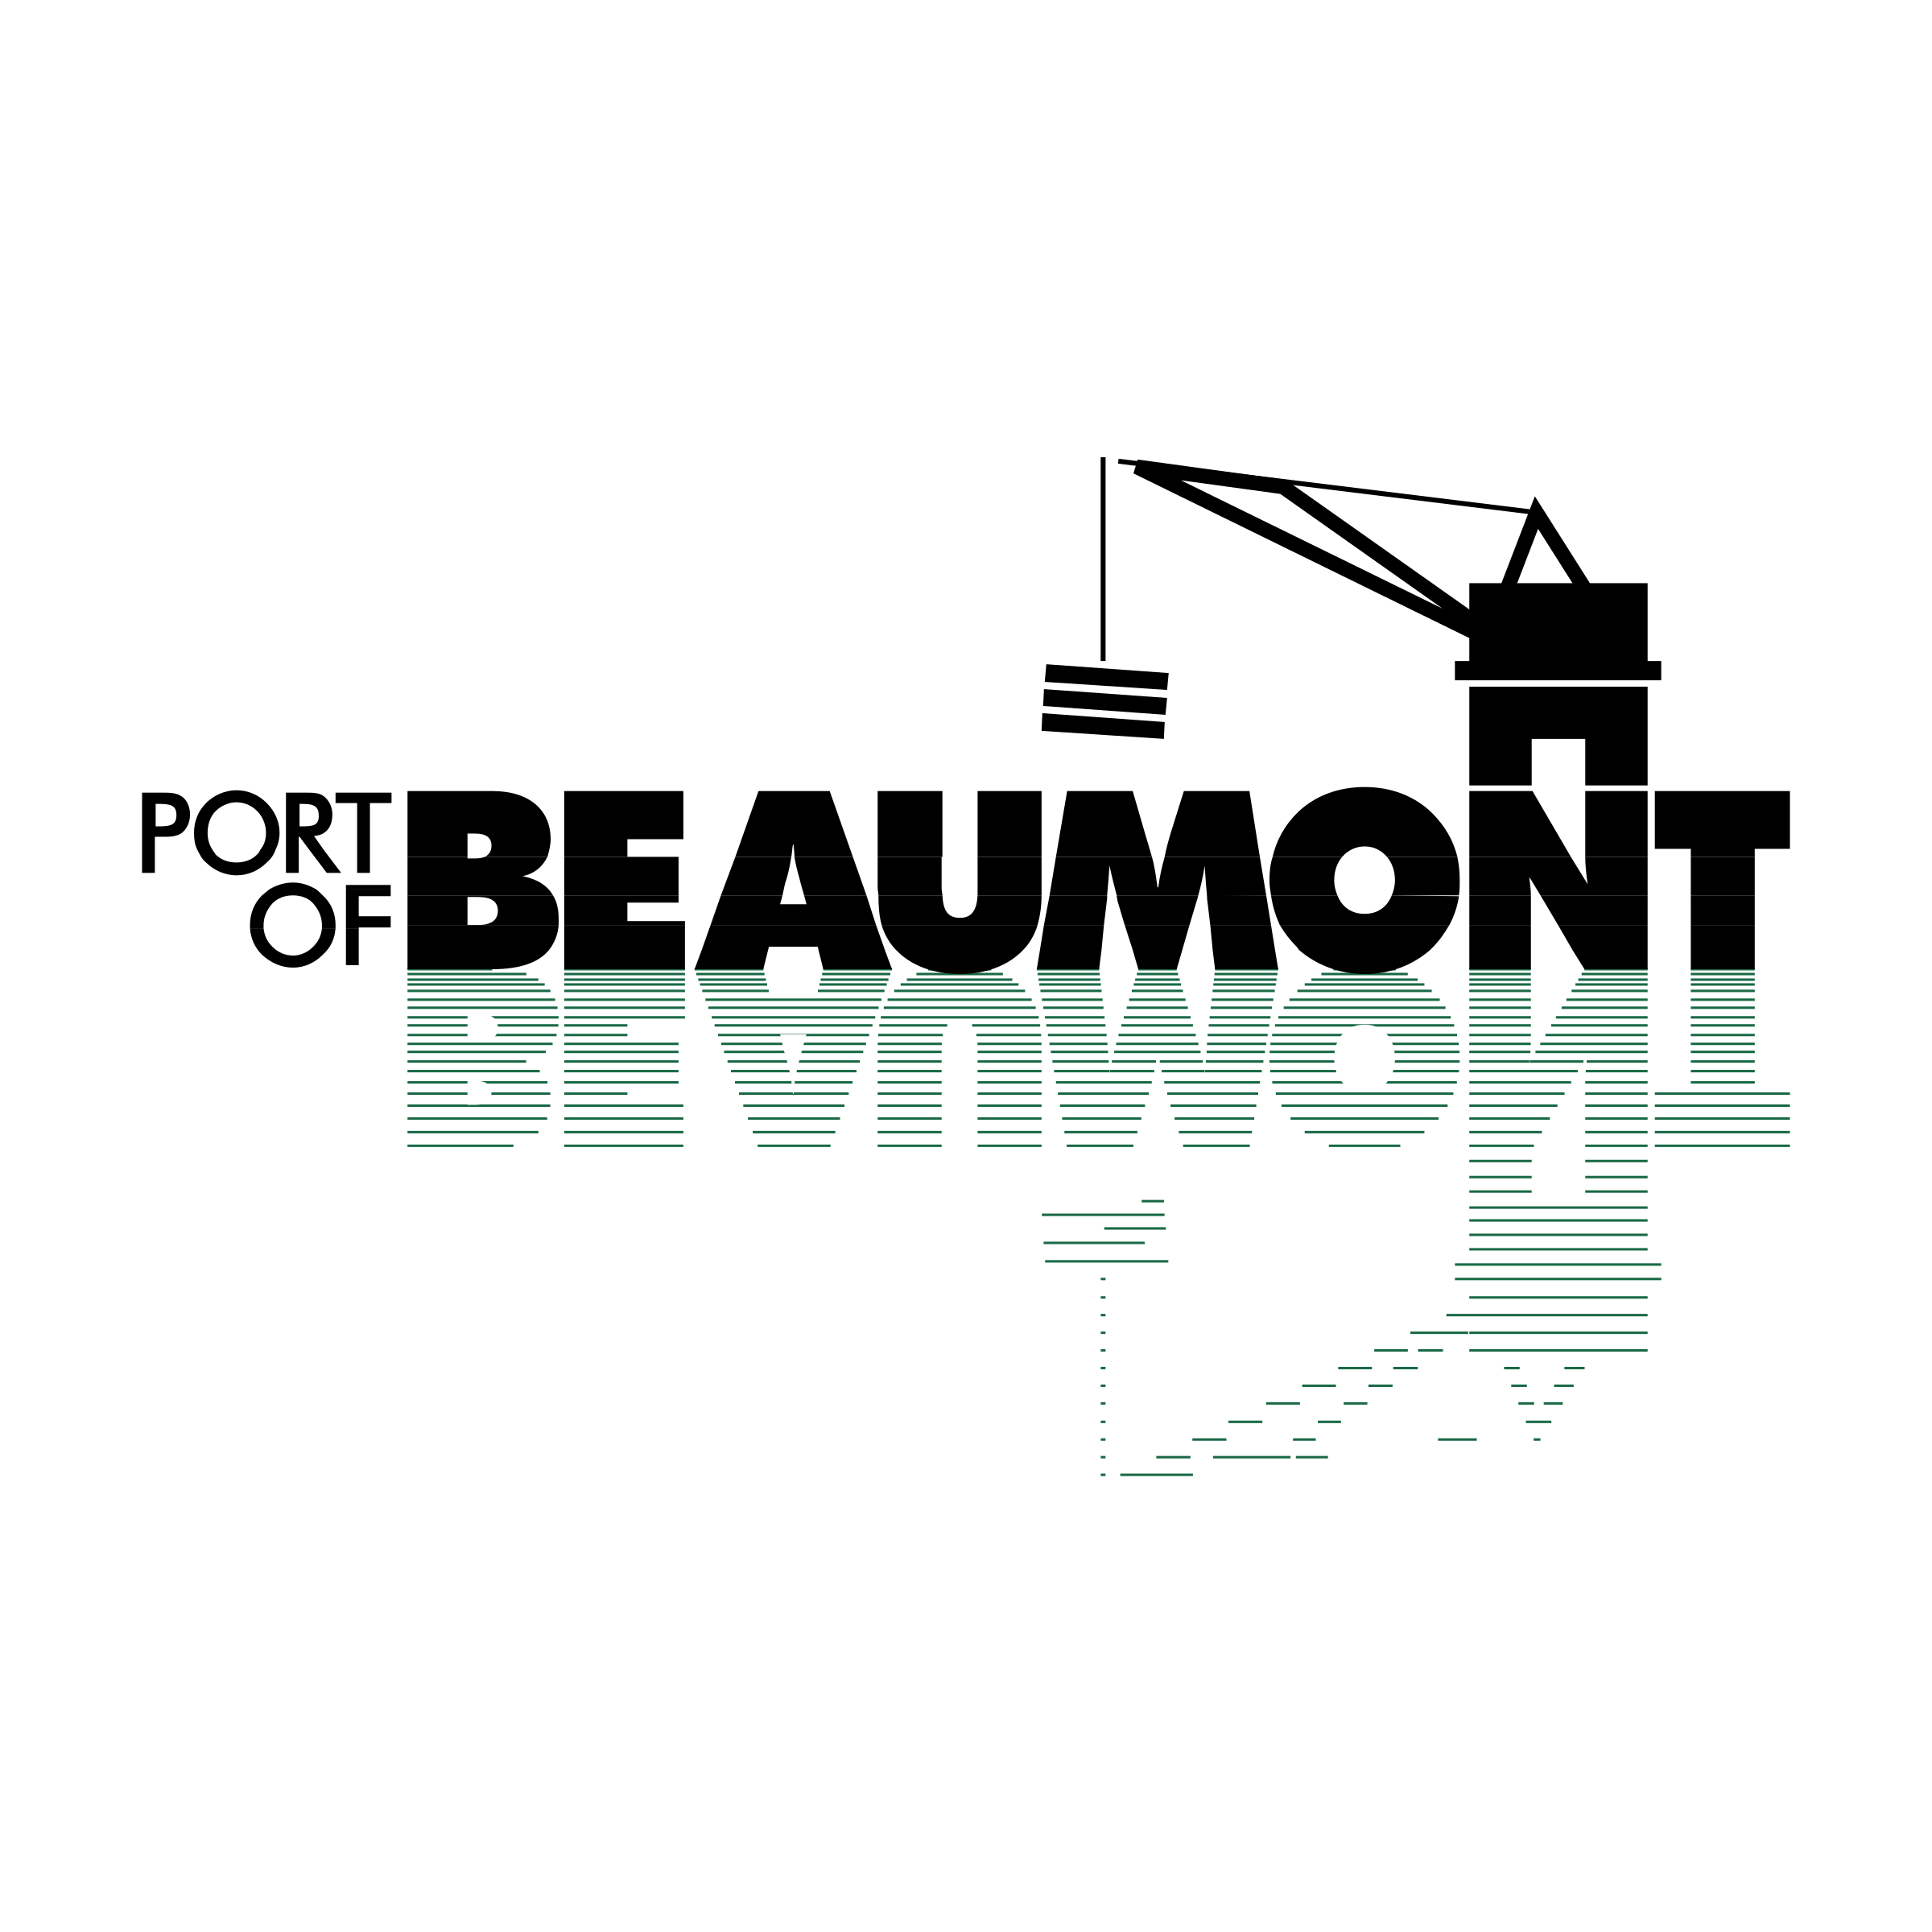 Beaumont Logo - Port of Beaumont Logo PNG Transparent & SVG Vector - Freebie Supply